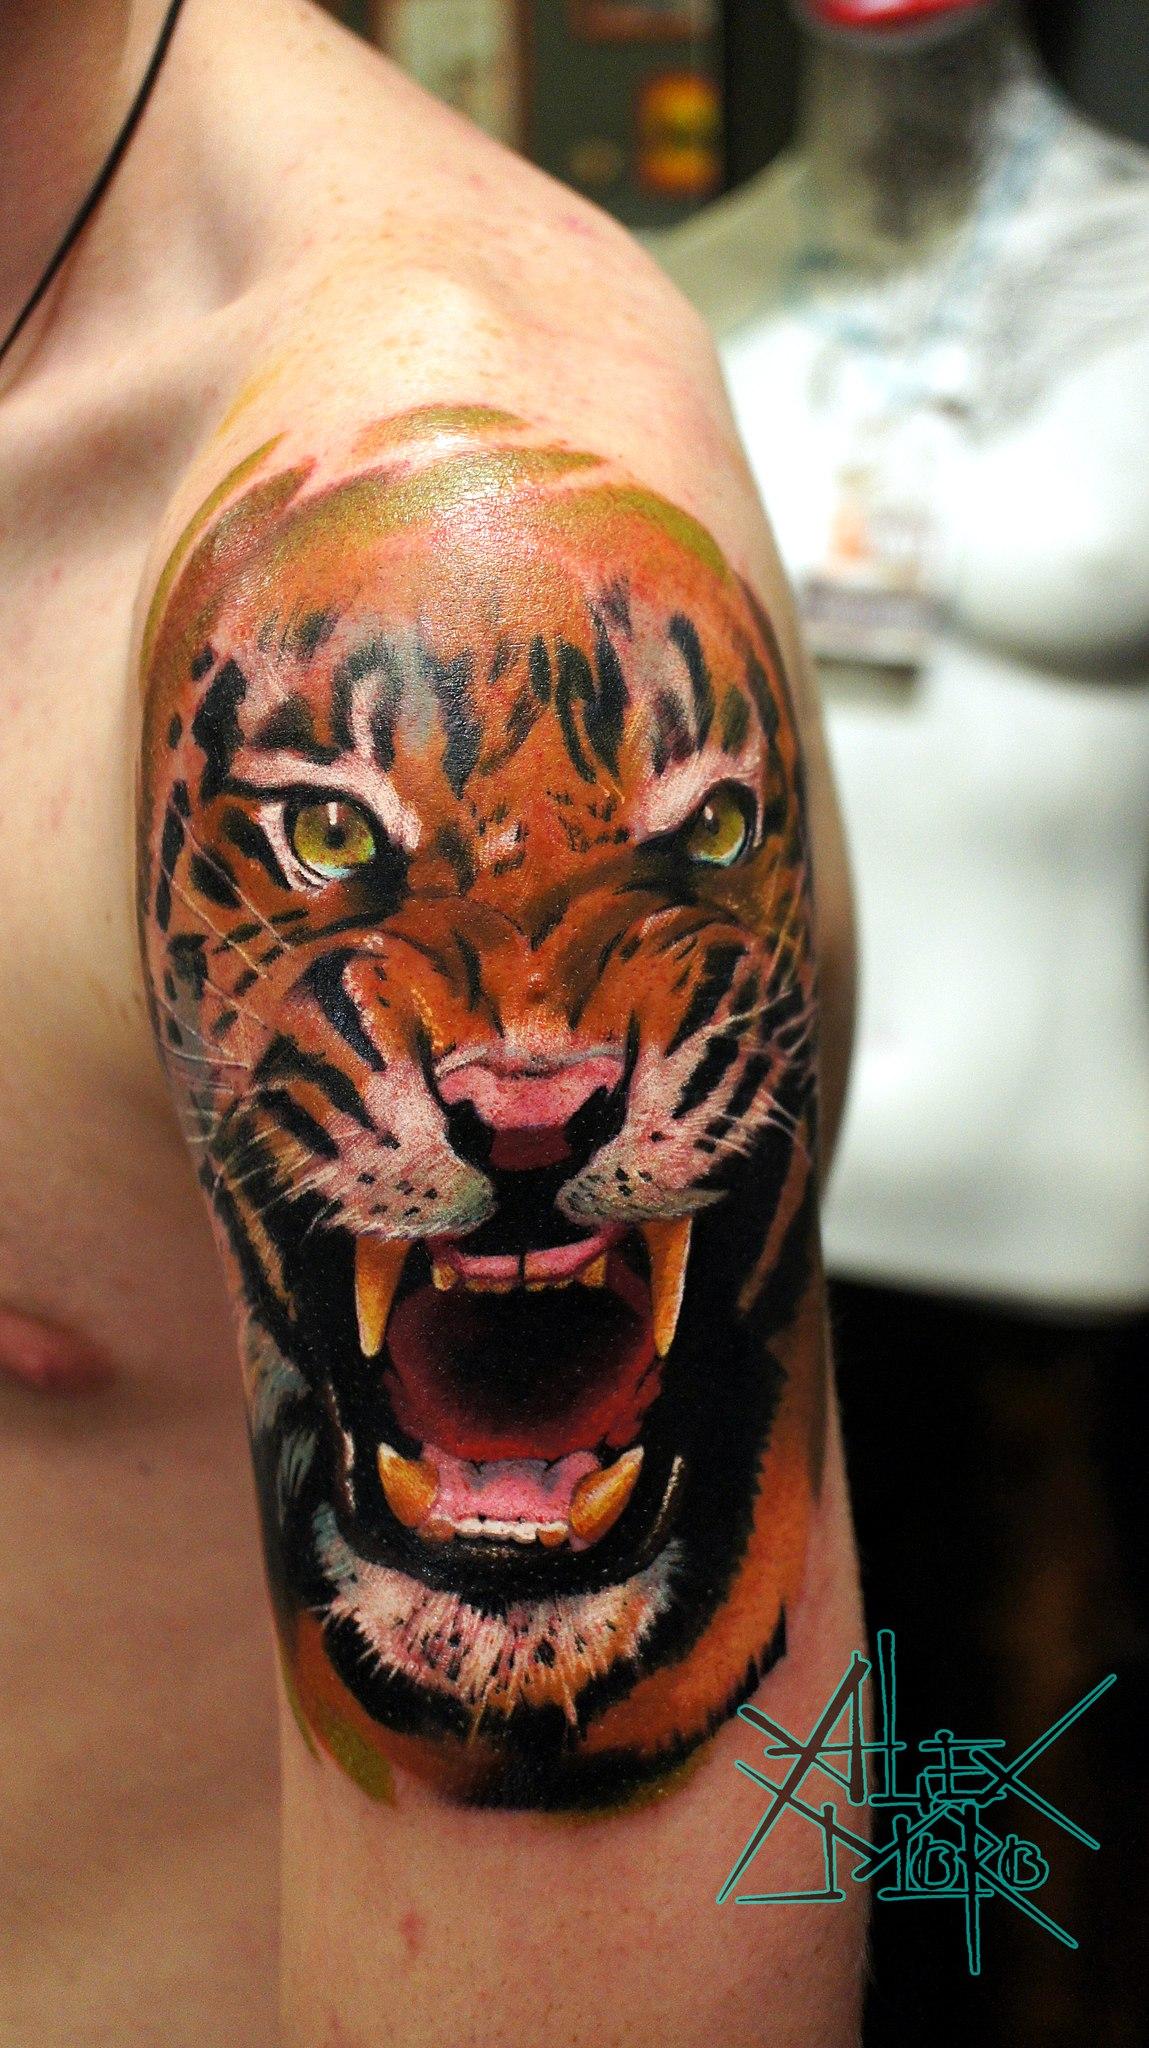 Художественная татуировка "Тигр", мастер Александр Морозов